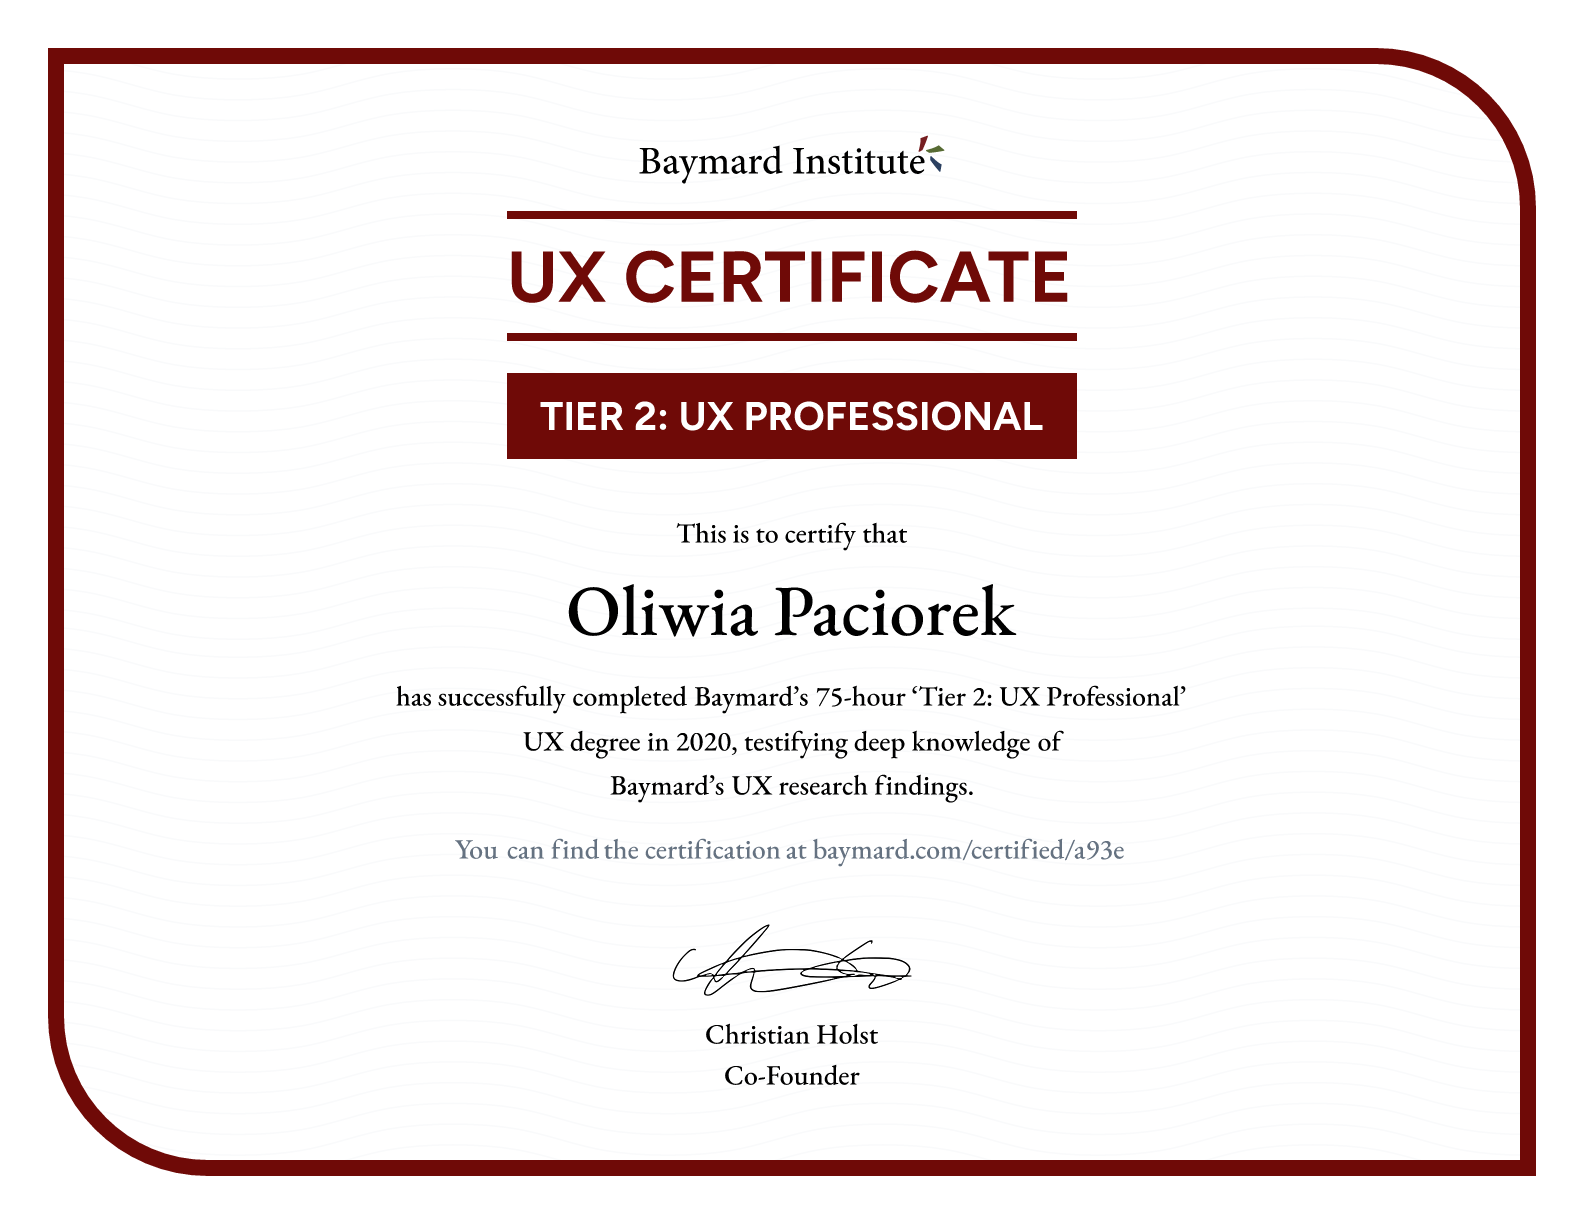 Oliwia Paciorek’s certificate